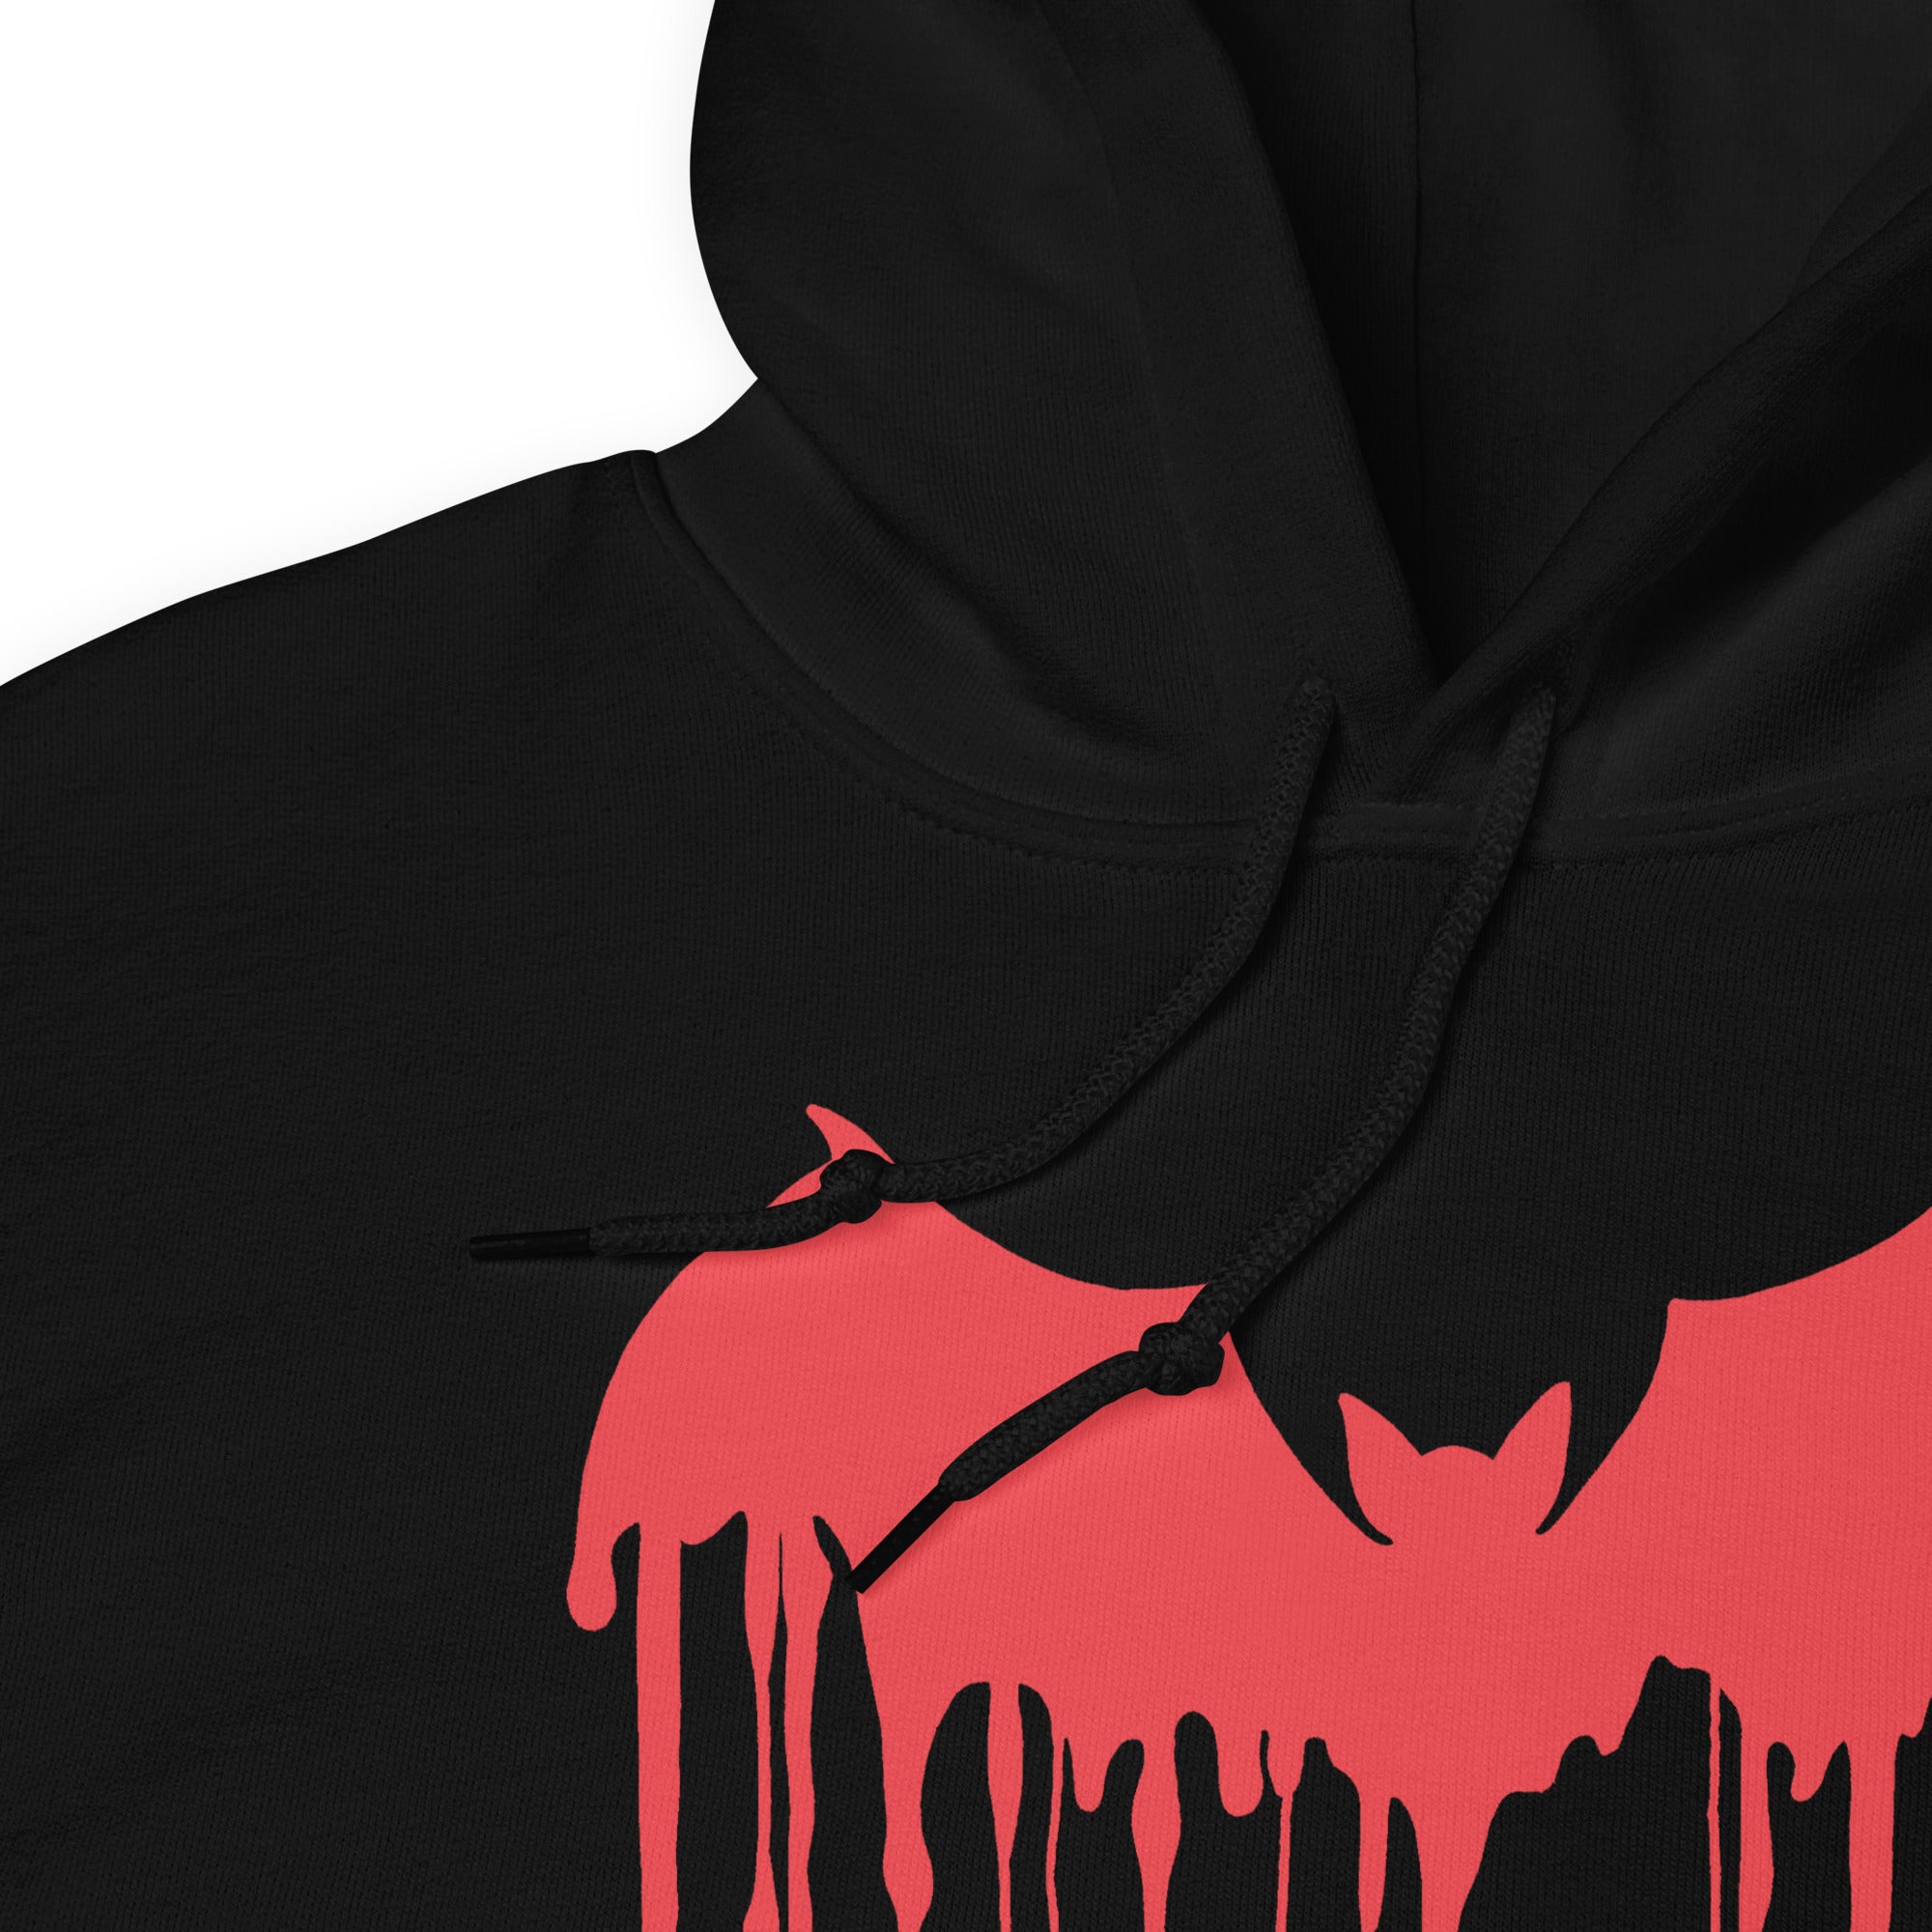 Red Blood Drip Melting Vampire Bat Unisex Hoodie Sweatshirt - Edge of Life Designs